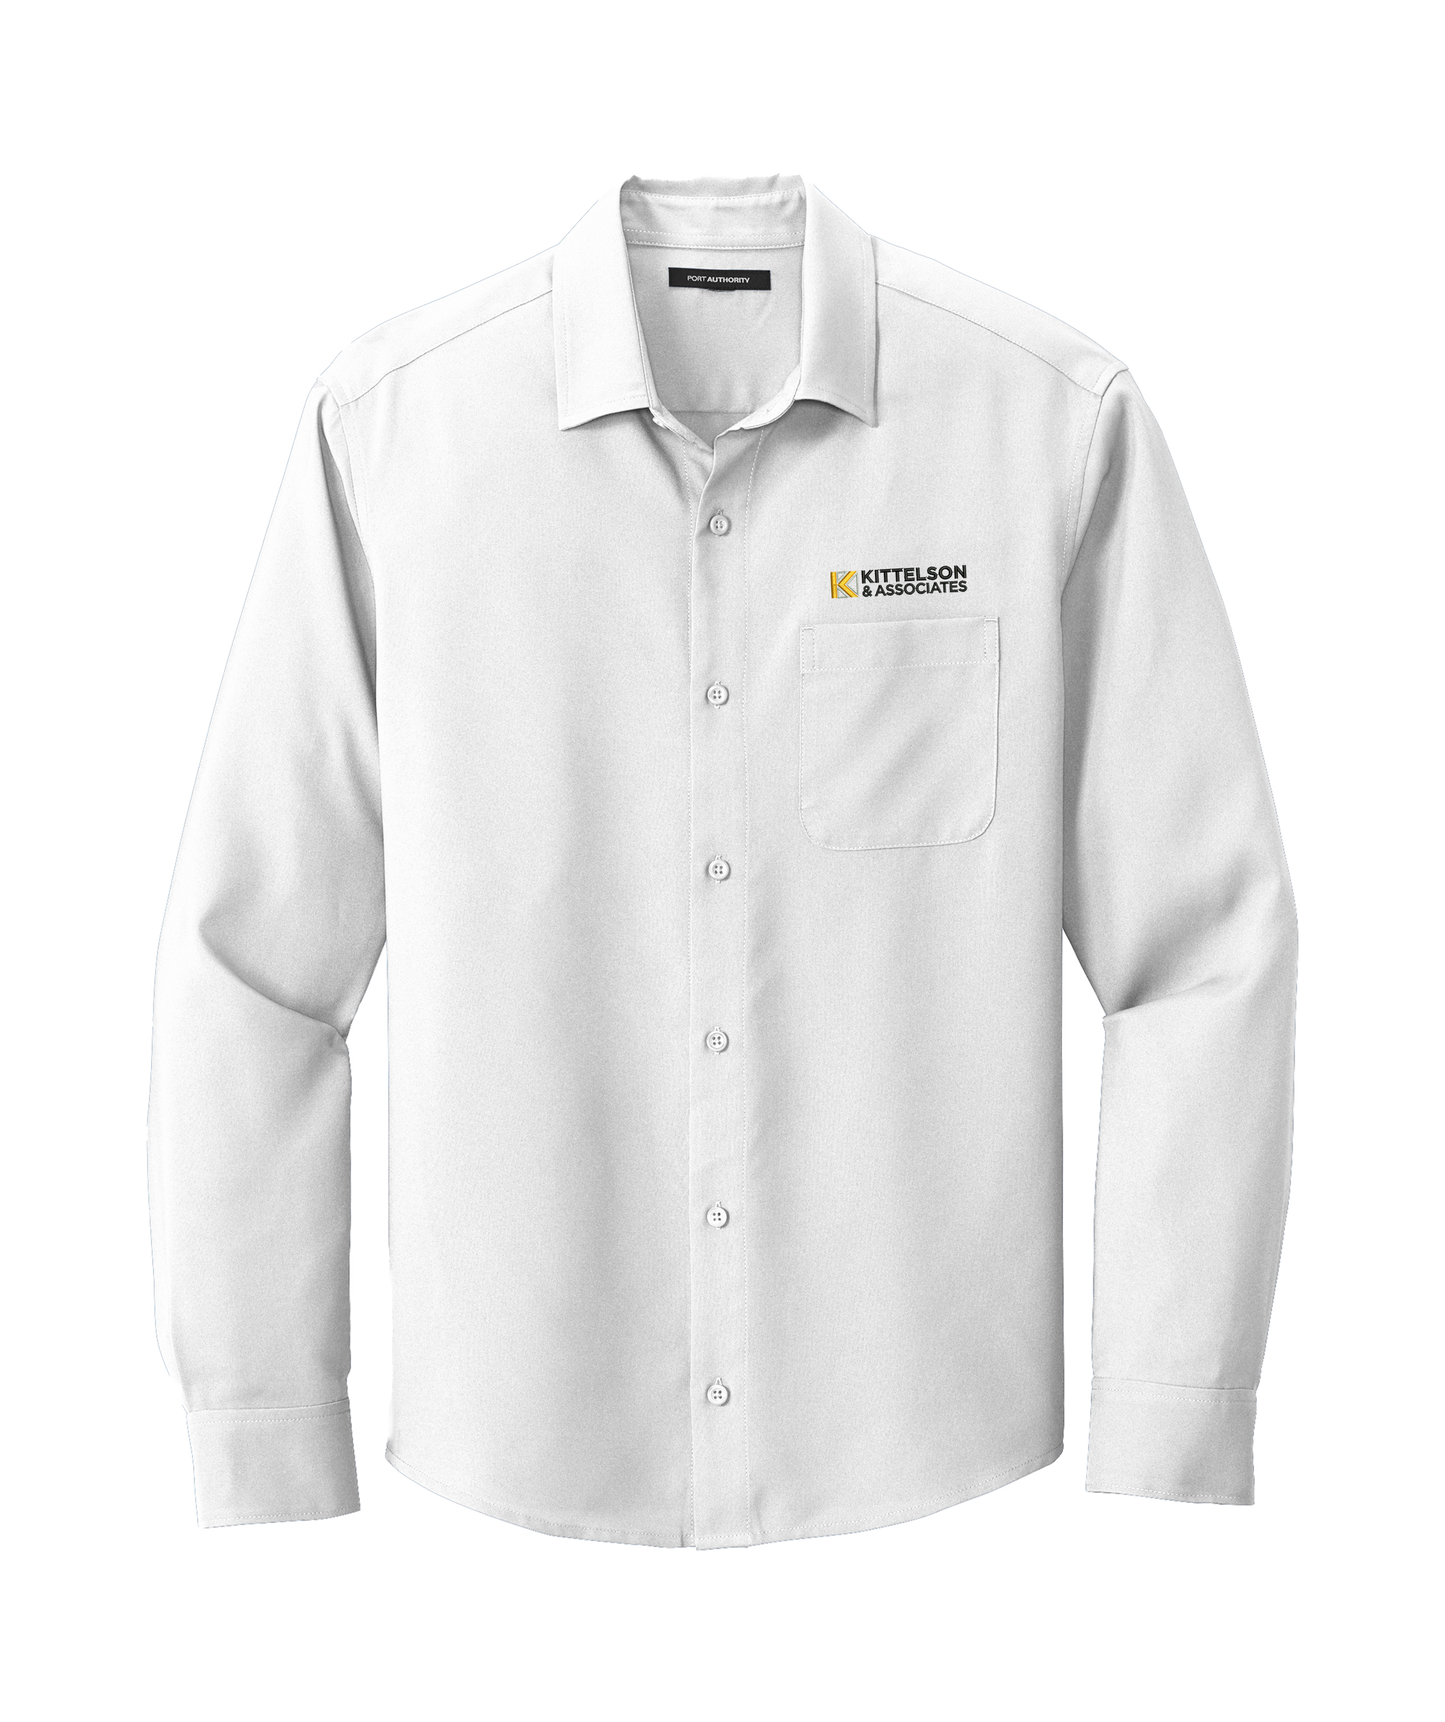 Port Authority ® Long Sleeve Performance Staff Shirt